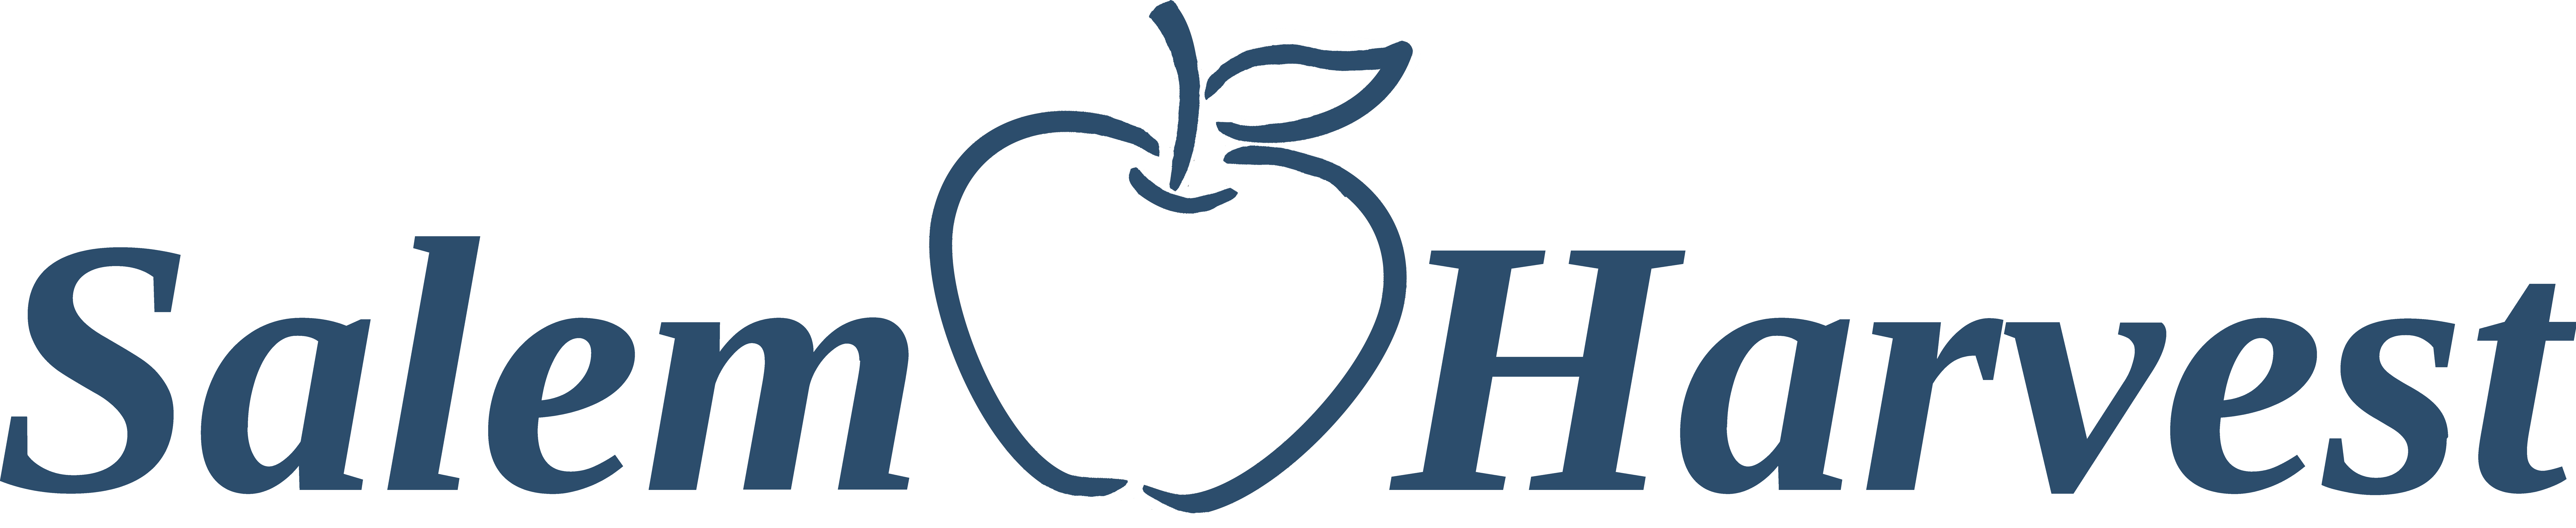 Salem Harvest logo